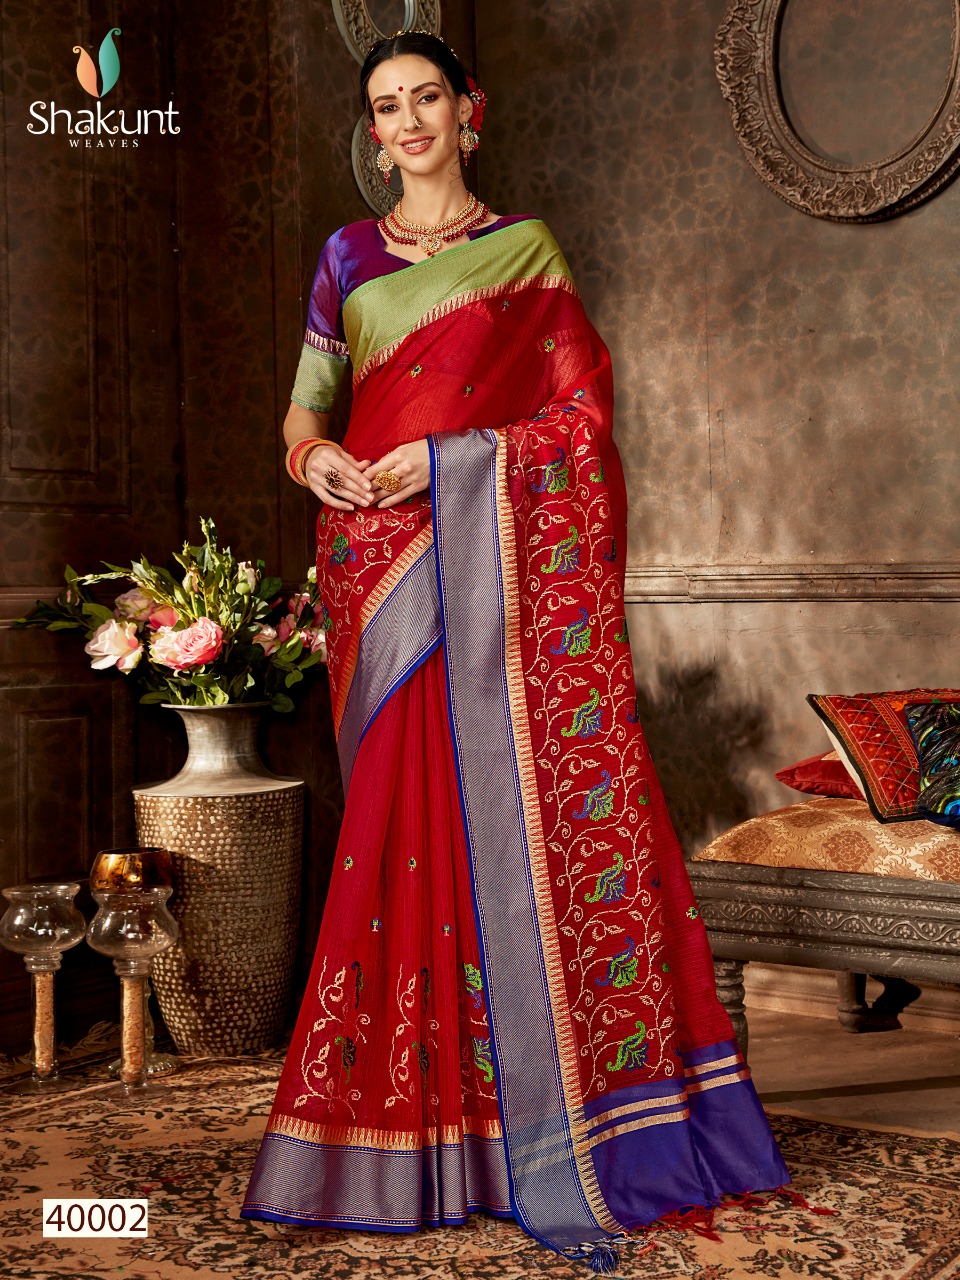 Shakunt weaves kanthkumari beautiful elegant sarees dealer